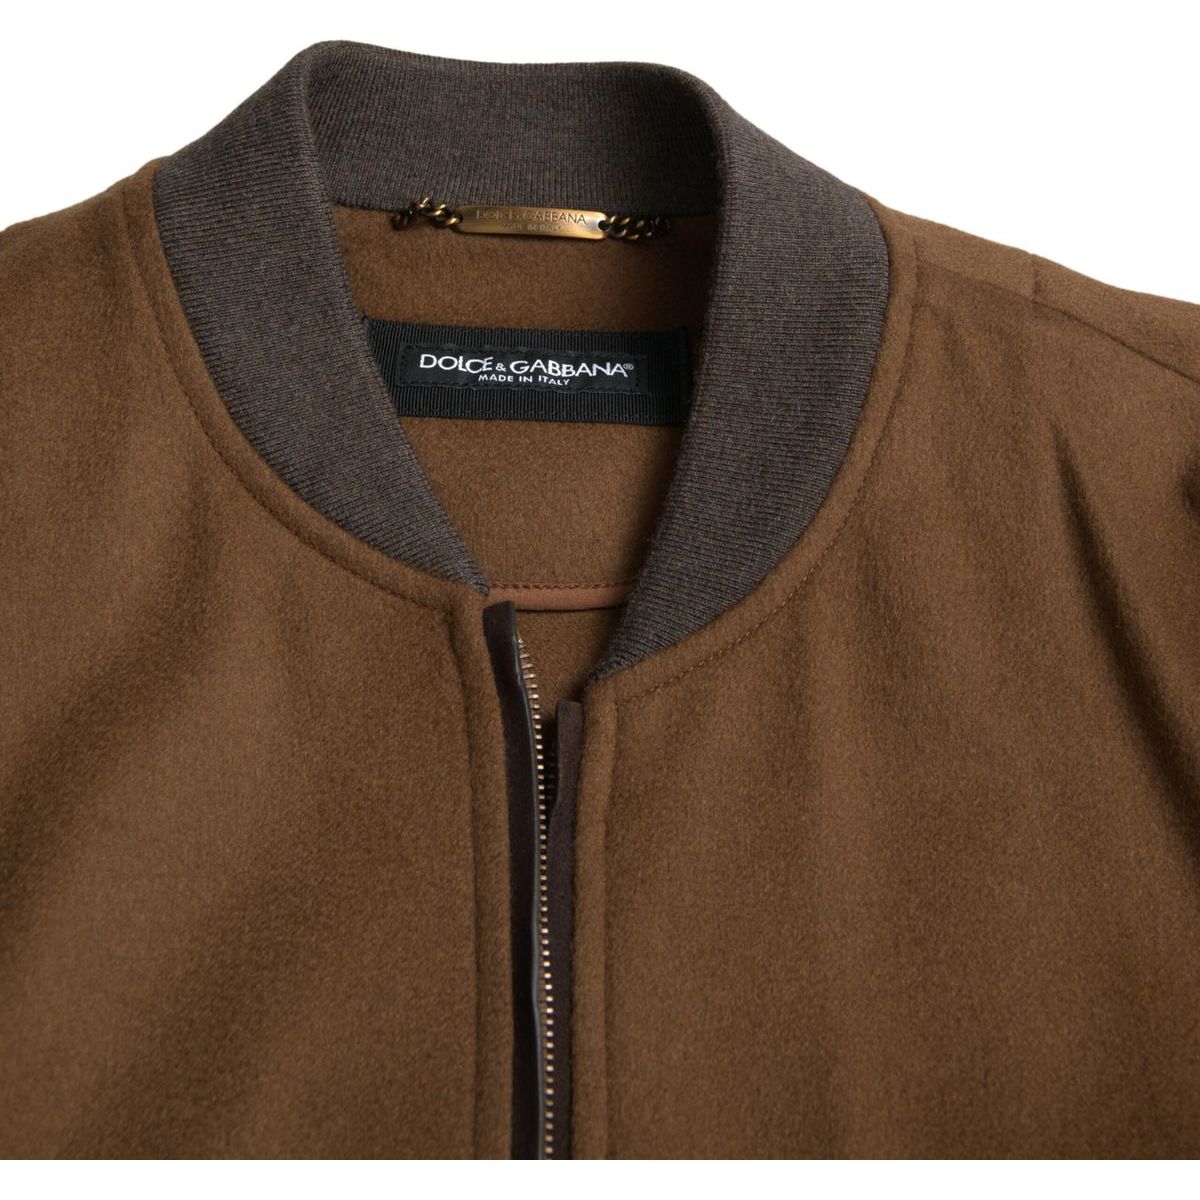 Dolce & Gabbana Elegant Brown Cashmere Bomber Jacket brown-cashmere-full-zip-bomber-men-jacket 465A7691-scaled-e5576863-ff6.jpg